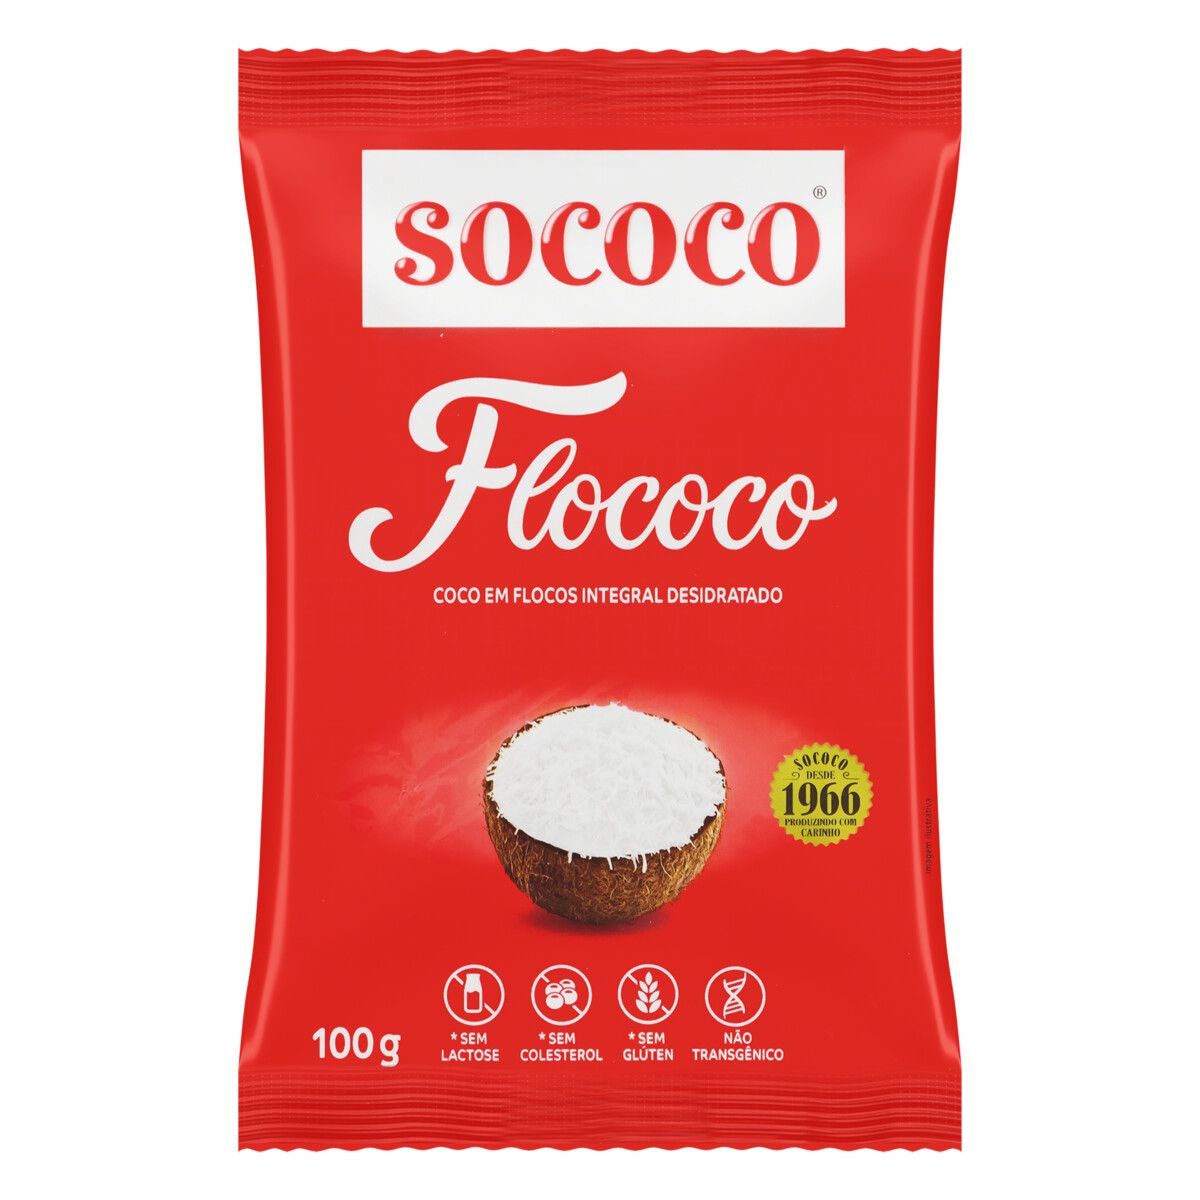 Coco Ralado Sococo Desidratado em Flocos Flococo 100g image number 0